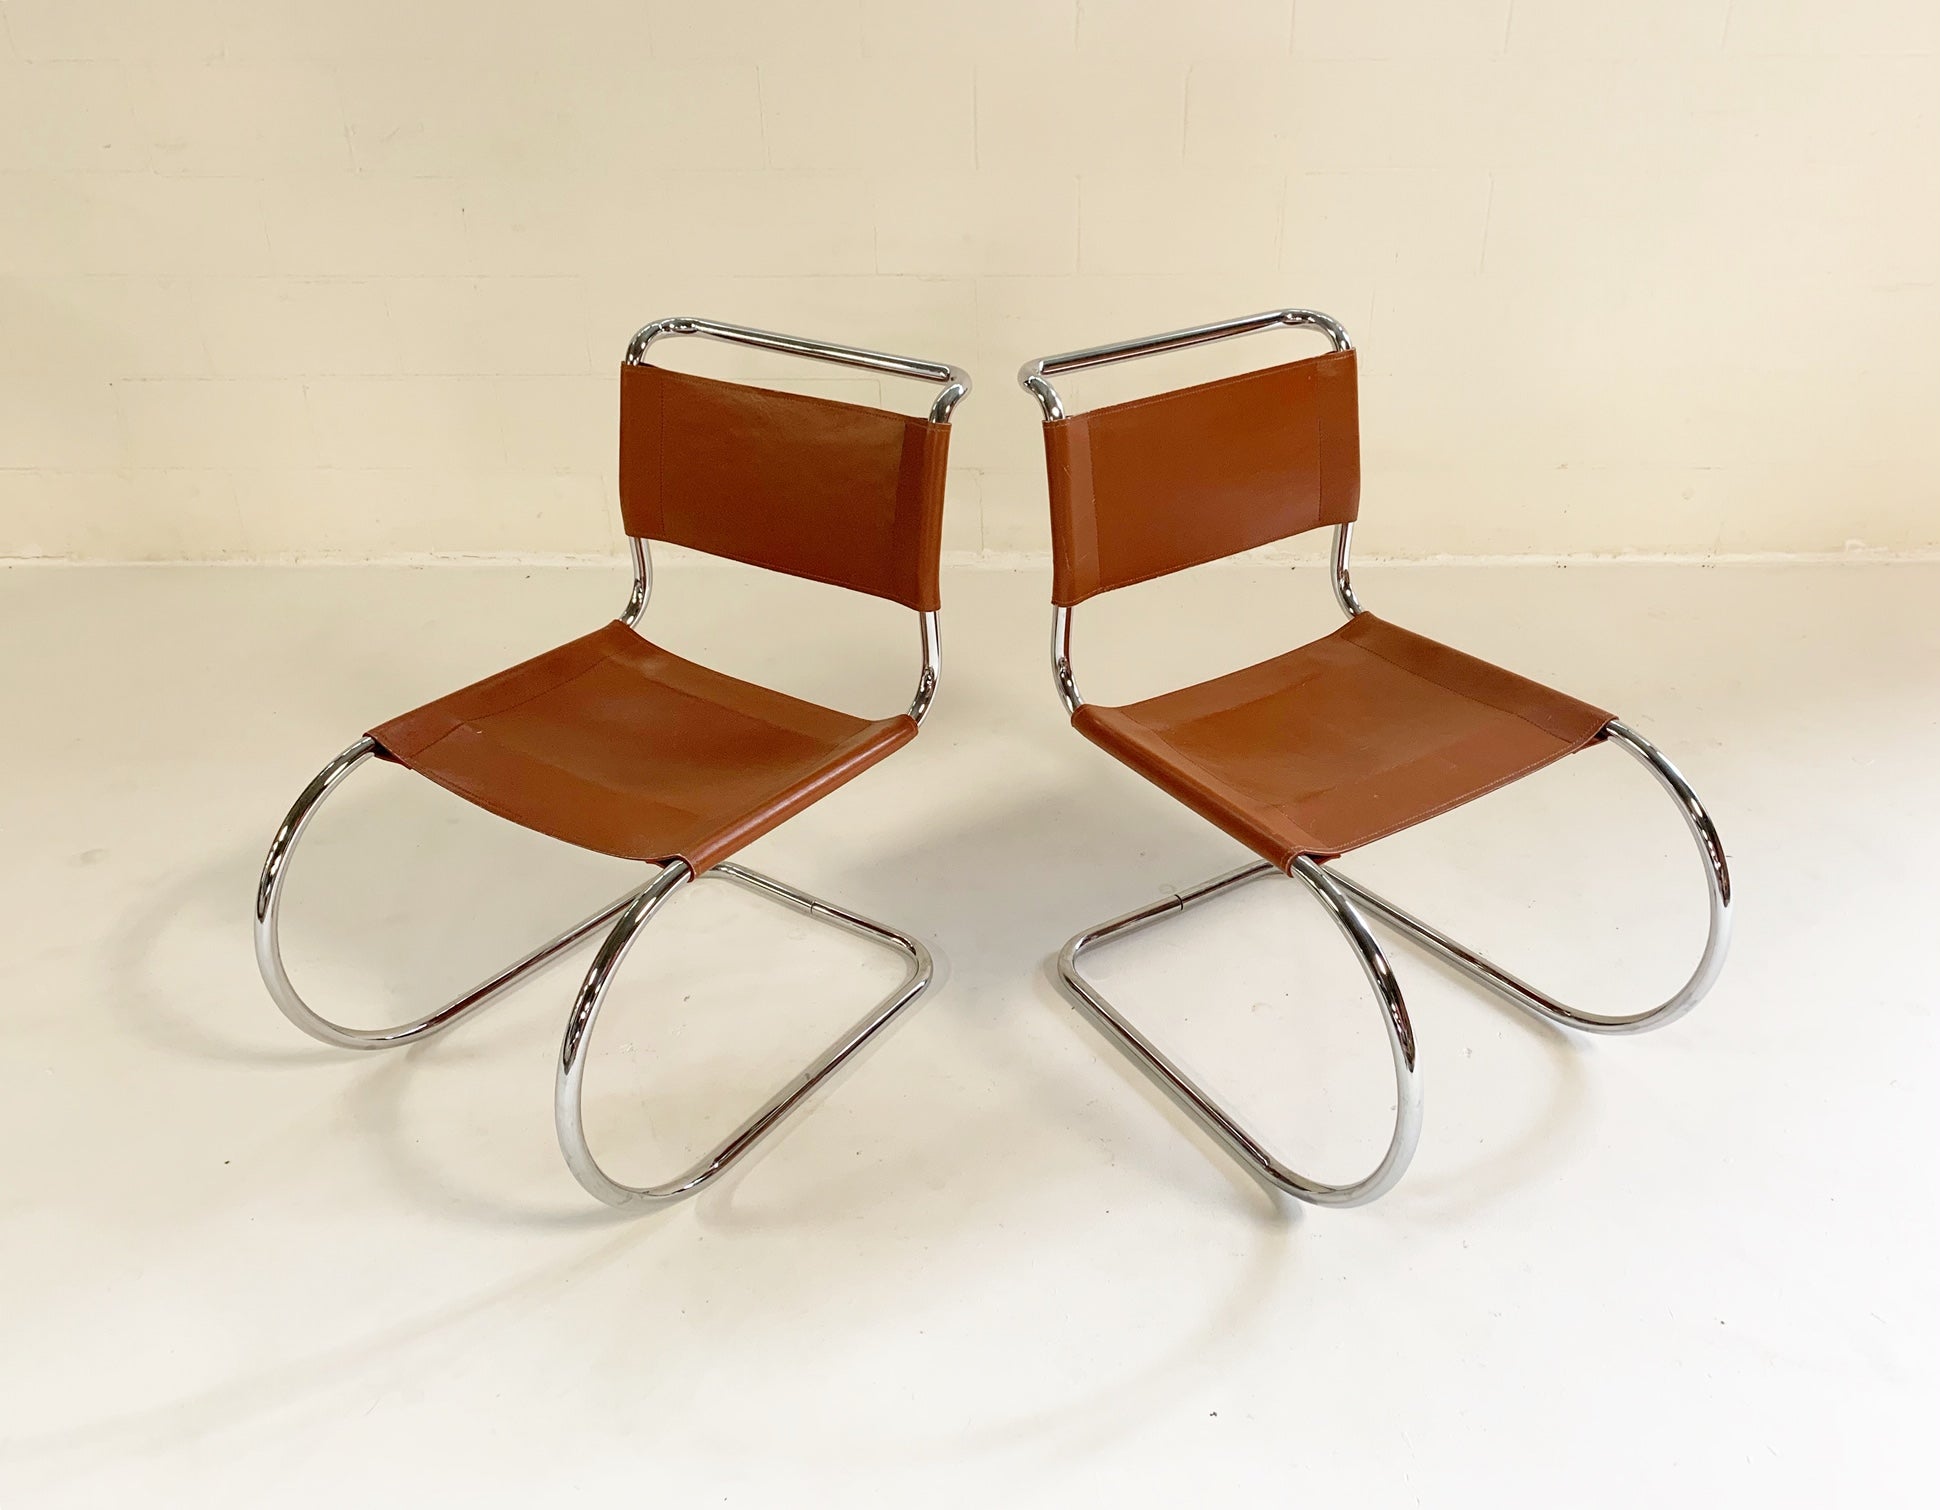 MR Chairs, pair - FORSYTH